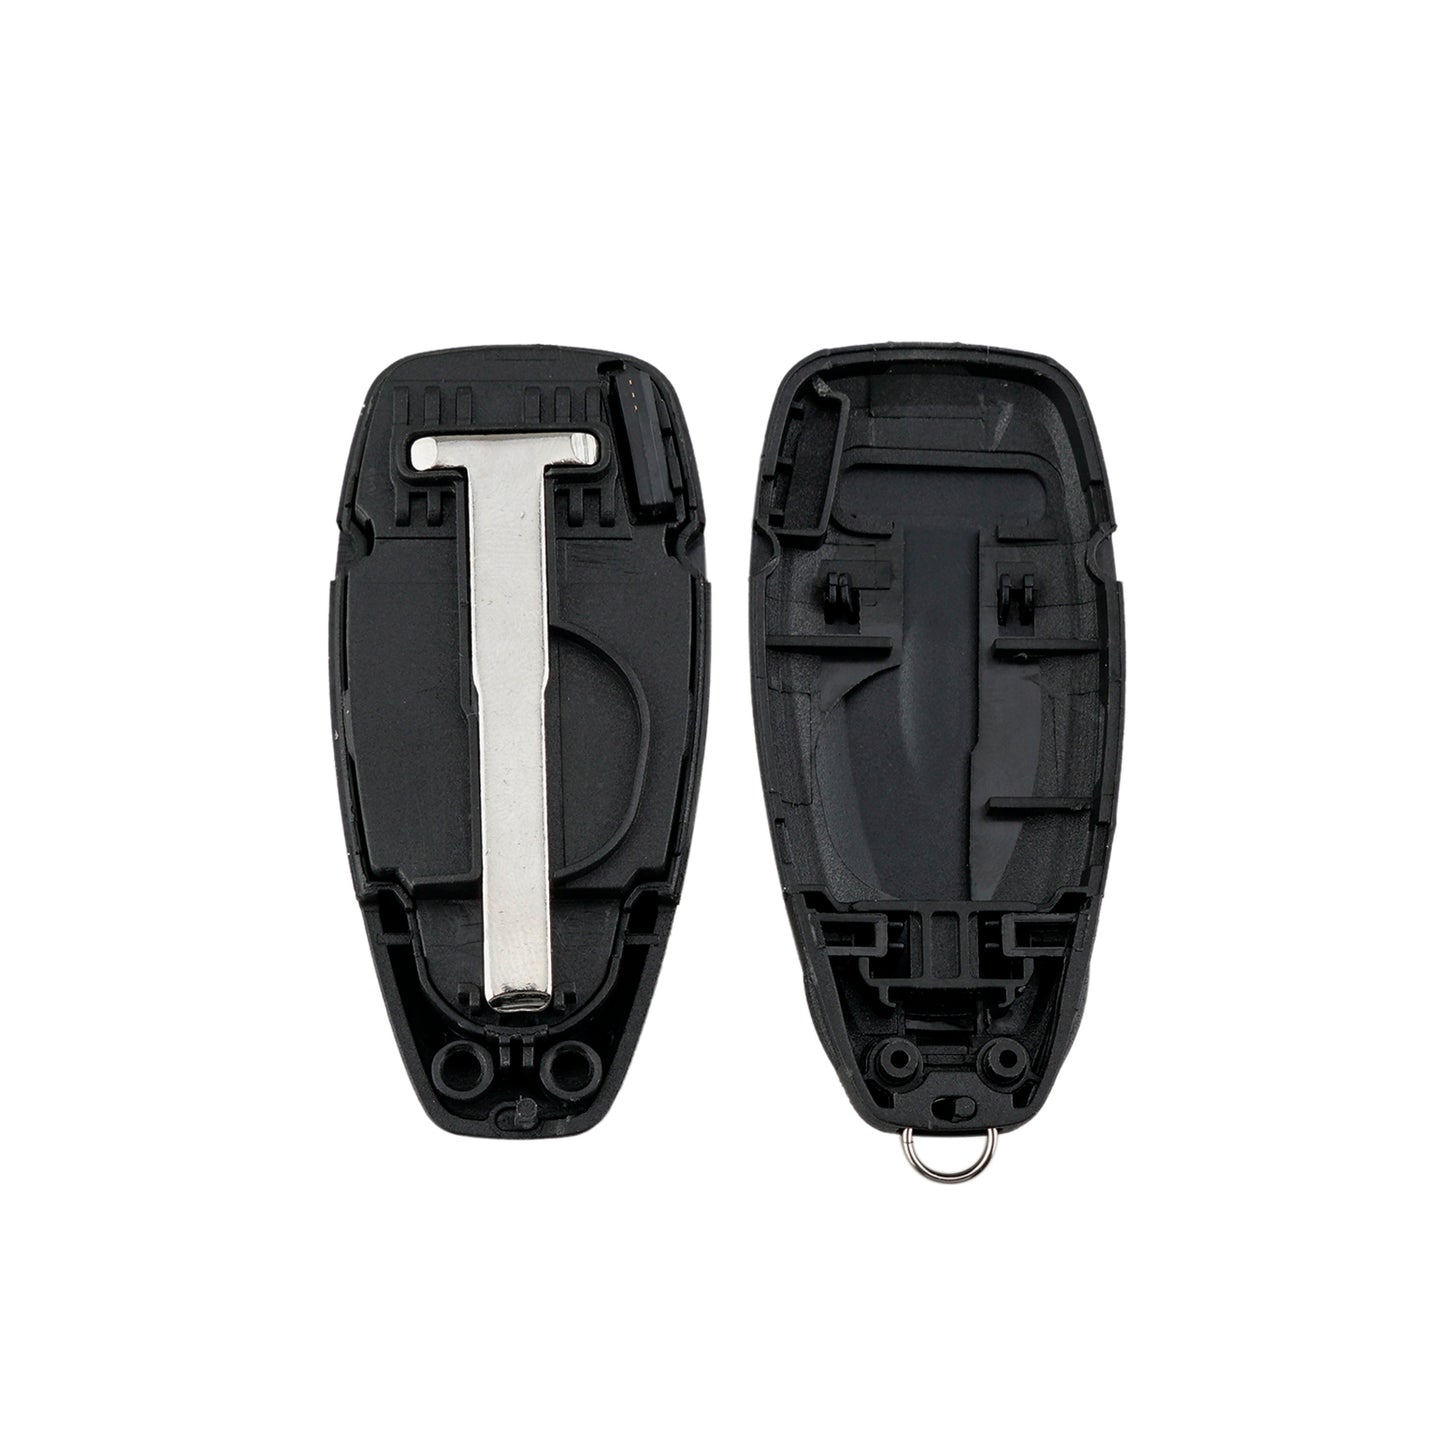 3 Buttons 434MHz Keyless Entry Proximity Remote Smart Fob Car Key For 2011-2019 Ford C-Max Fiesta Focus FCC ID : KR55WK48801 SKU:J127